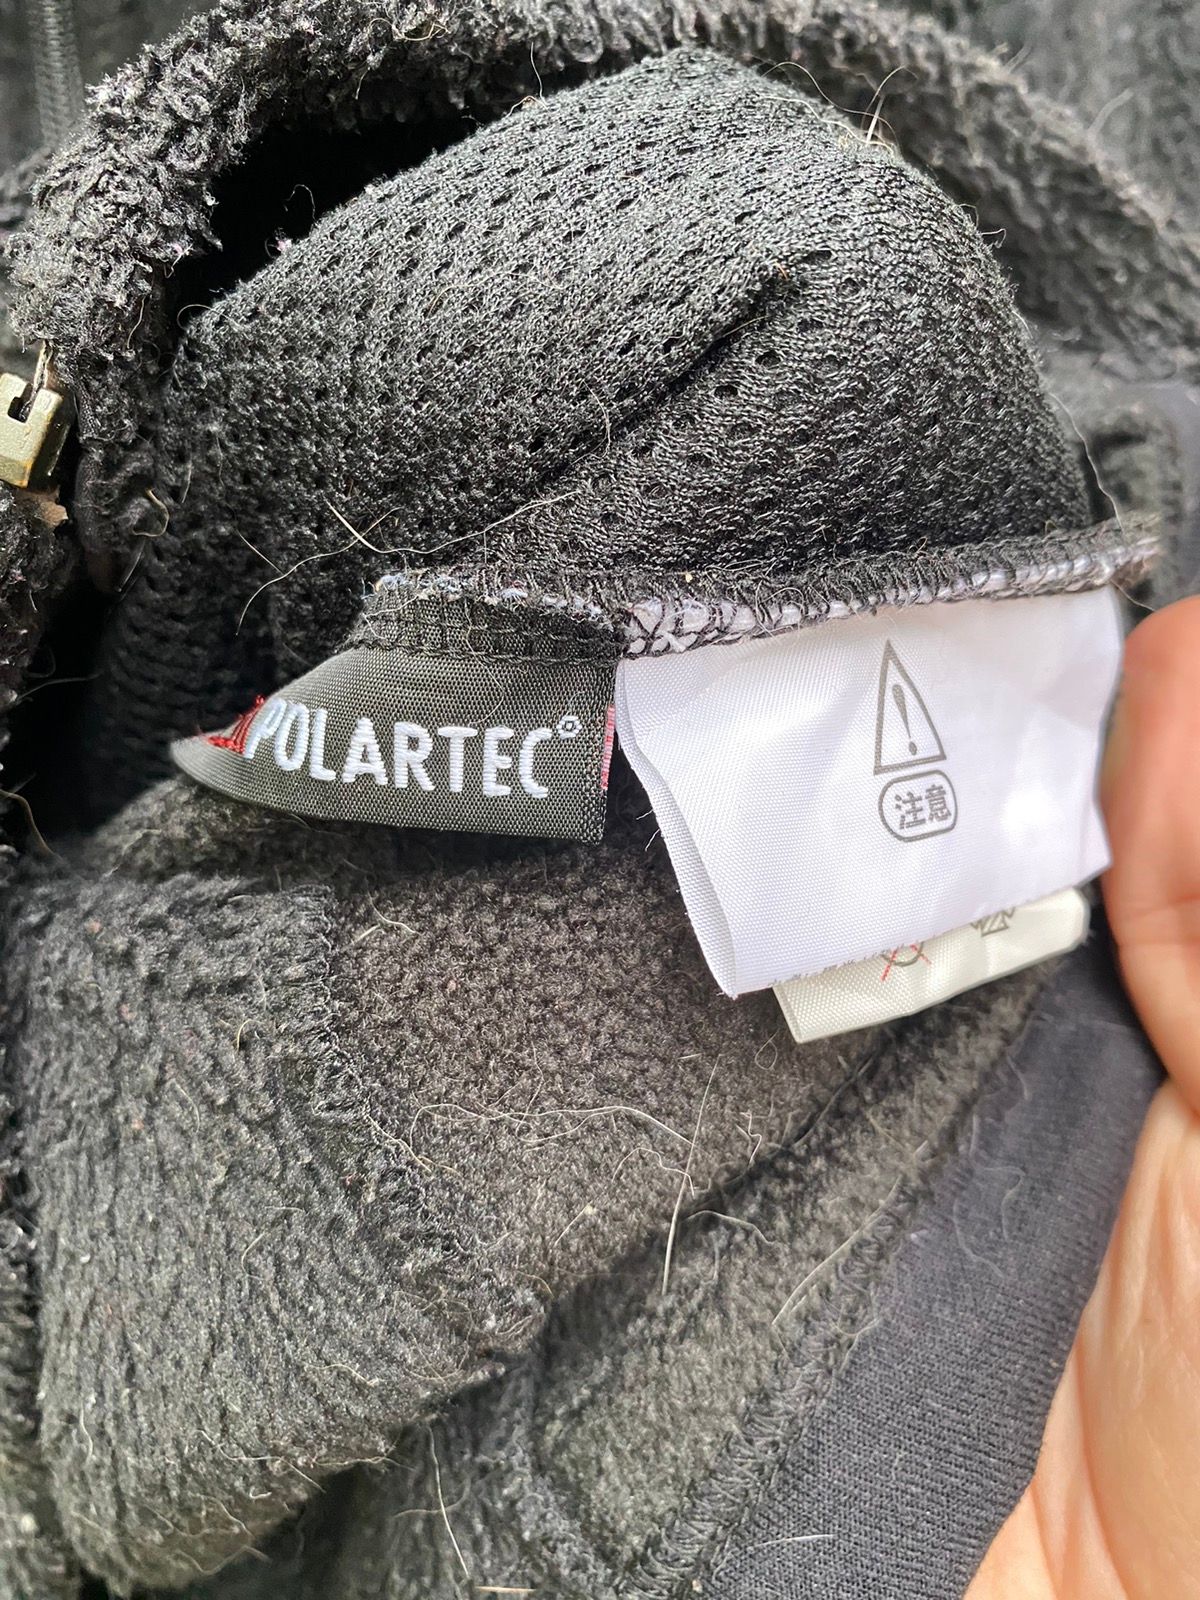 The North Face Fleece Polartec Vest - 8